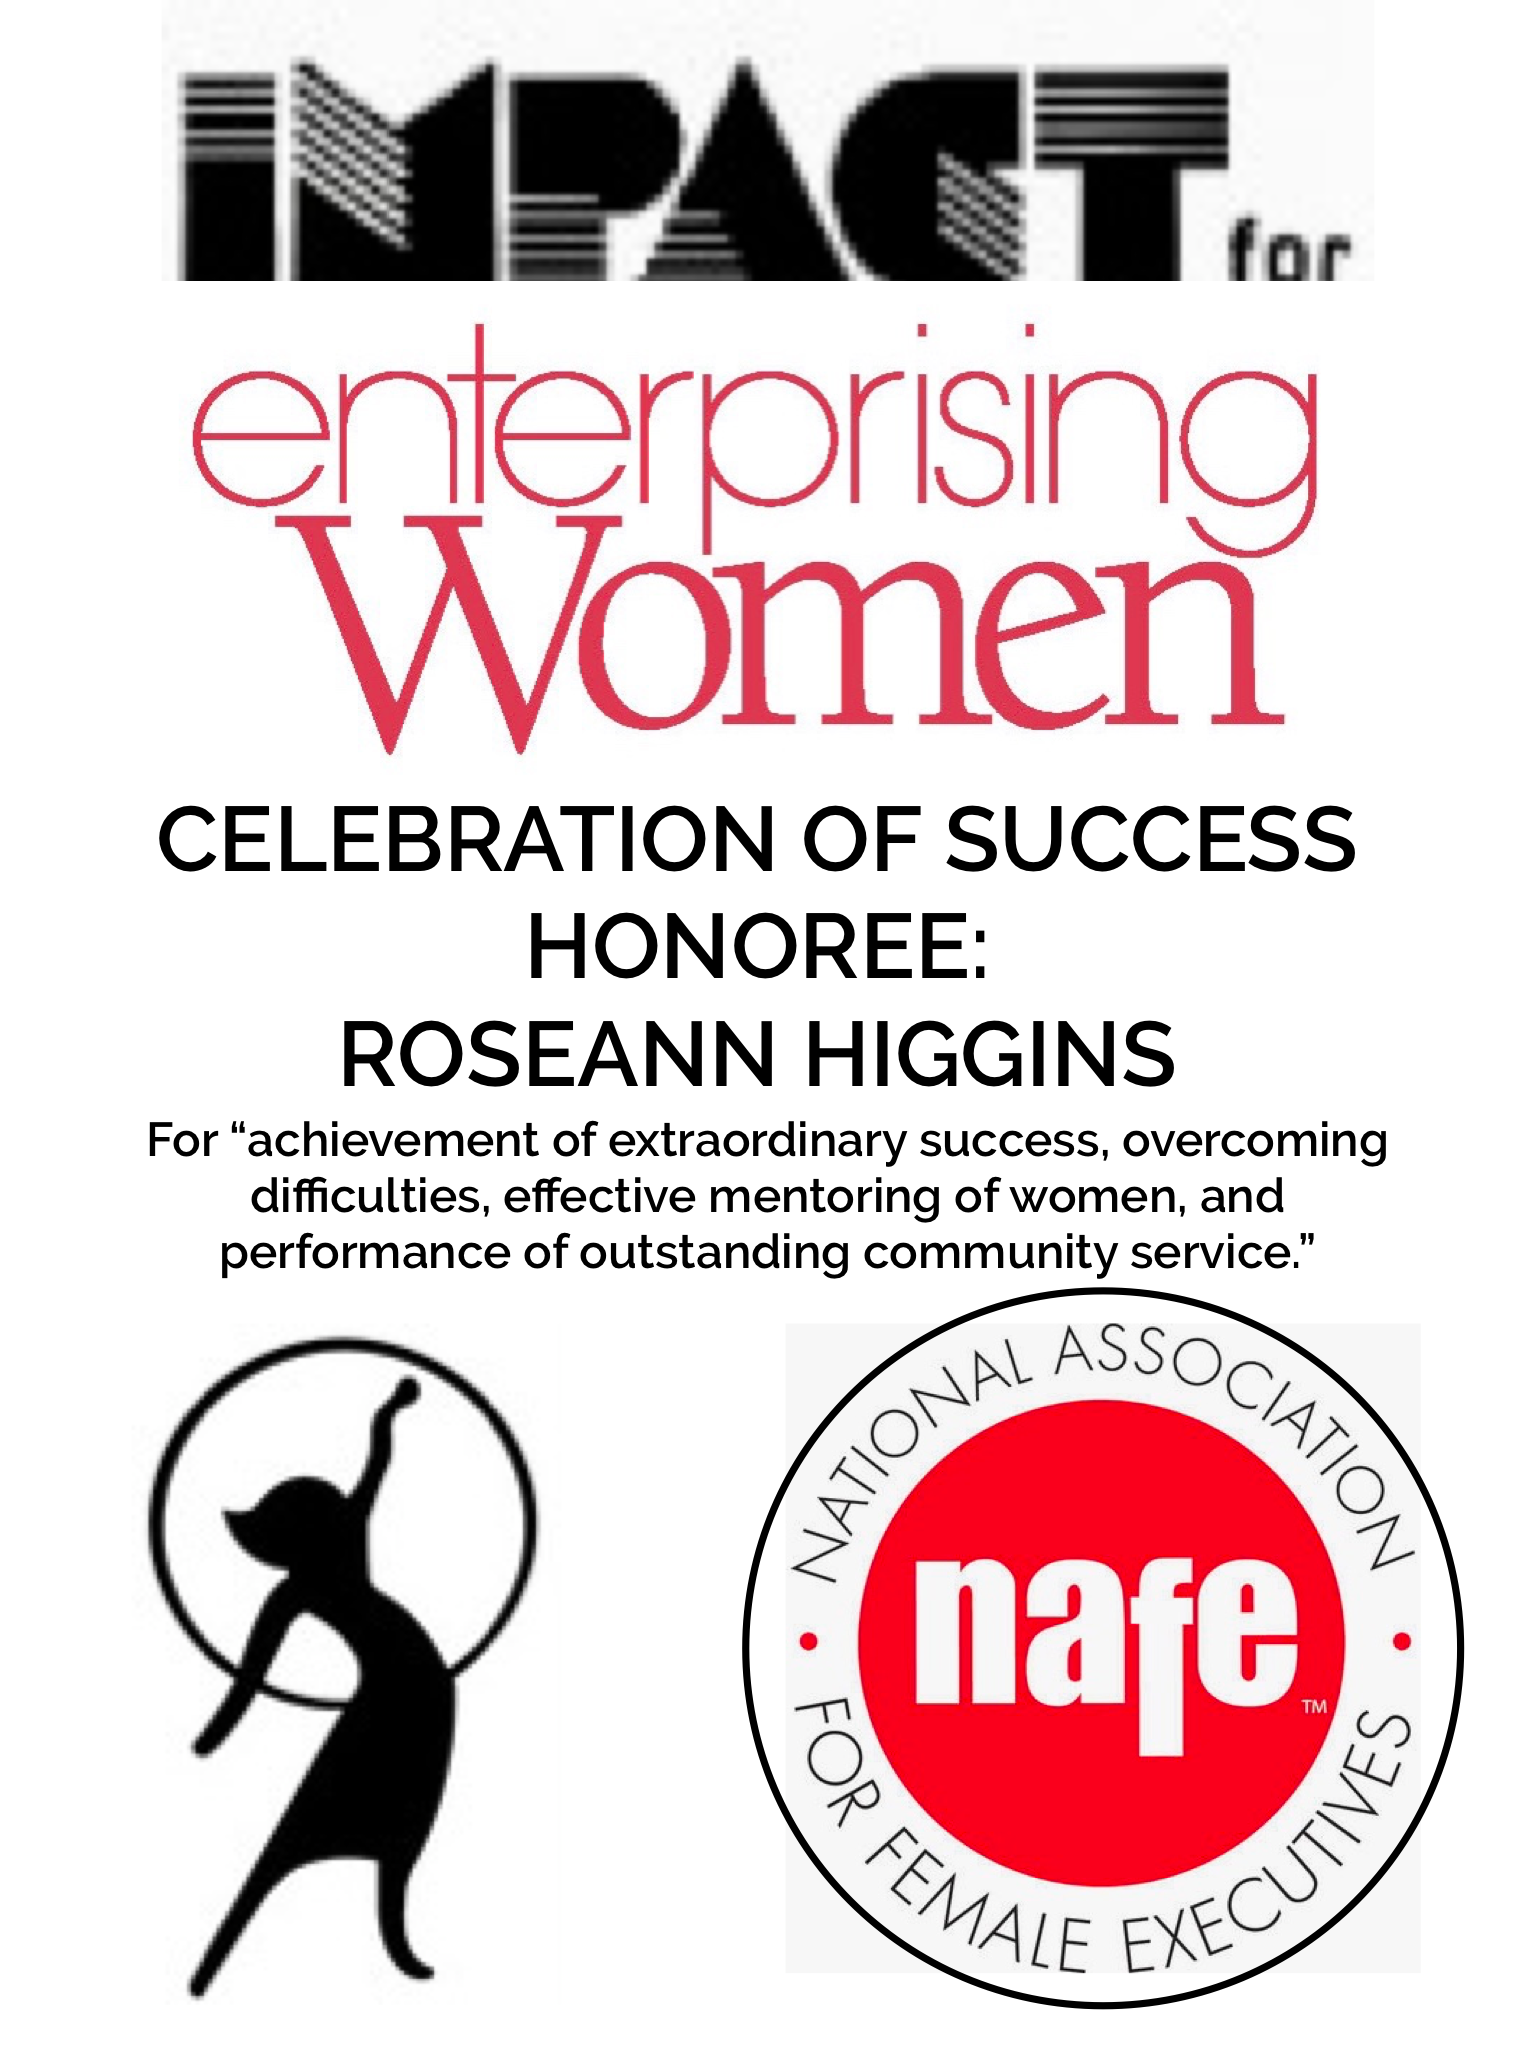 Roseann Higgins, Impact for Enterprising Women, National Association for Female Executives, Honoree, Celebration of Success, mentoring, women, community service, Phoenix, Arizona